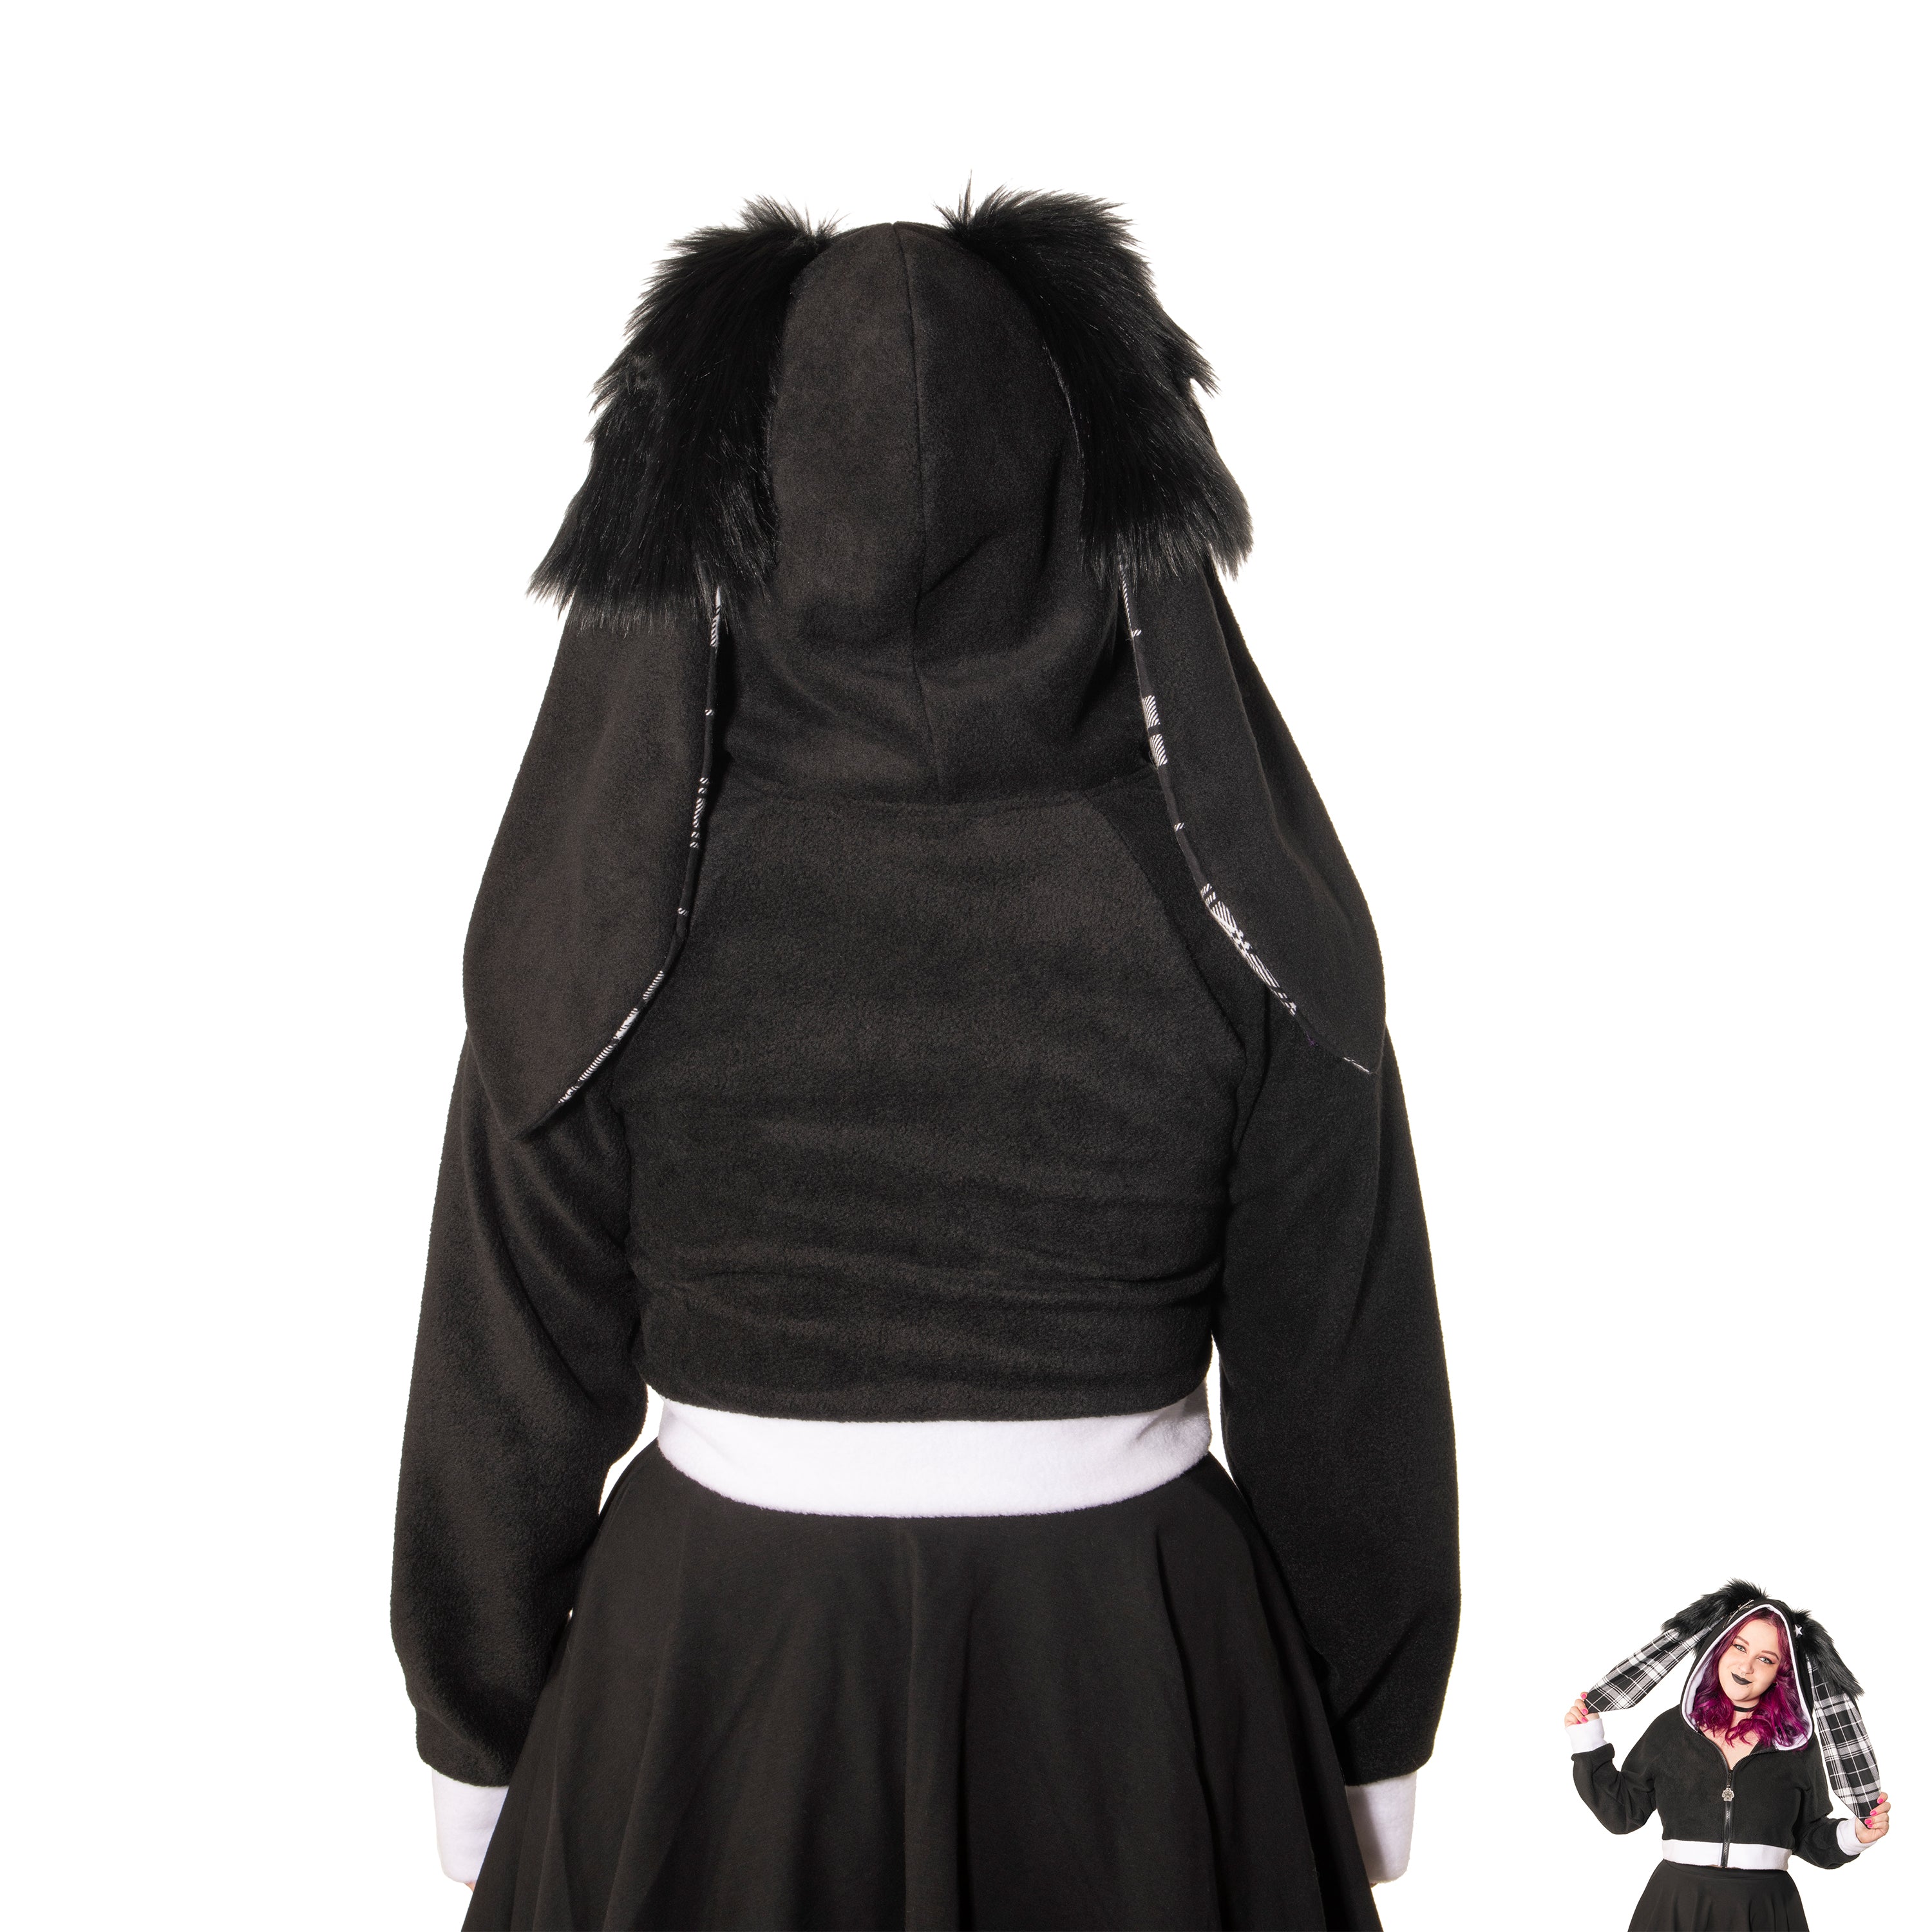 Pin Punx Bunny Nybble Crop Hoodie - Pawstar Pawstar Crop Hoodie bunny, cosplay, costume, furry, hoodie, ship-15, ship-30day